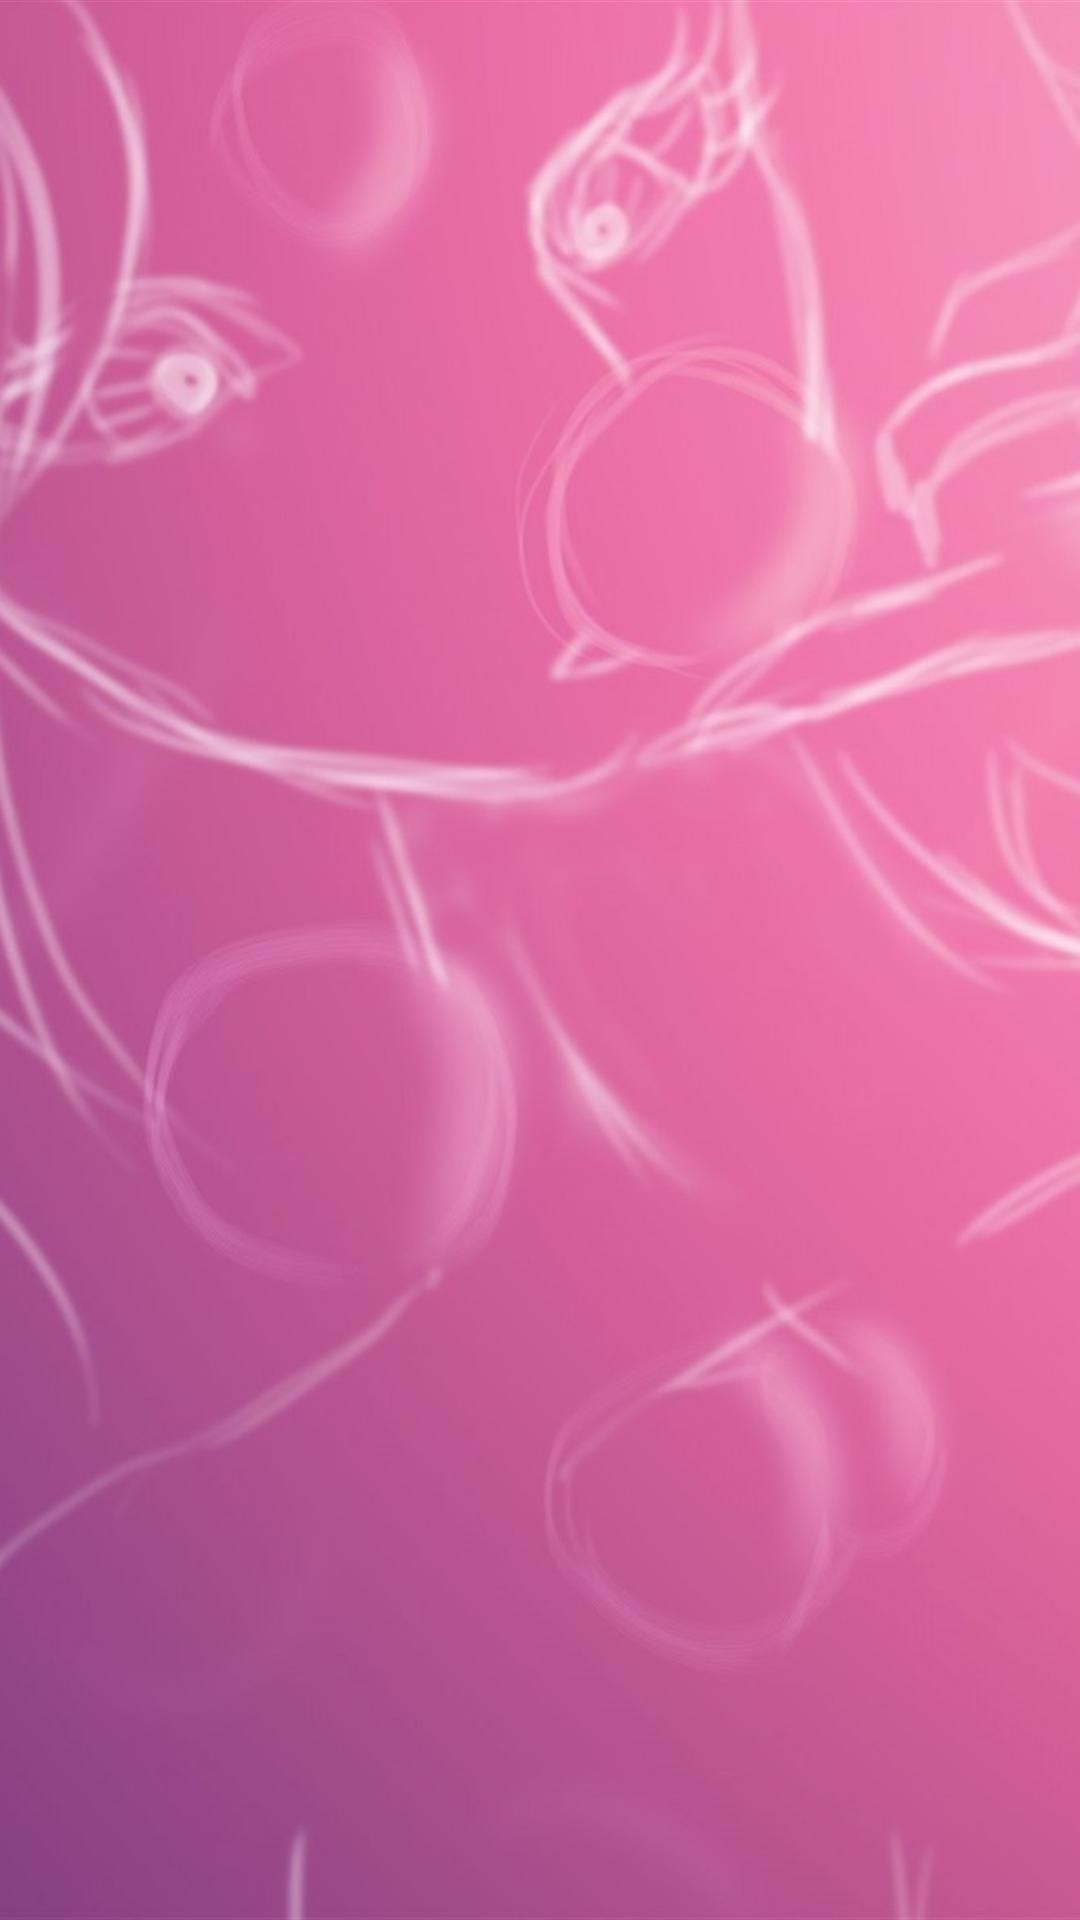 1080x1920 Cool Pink Iphone Desktop Wallpaper.